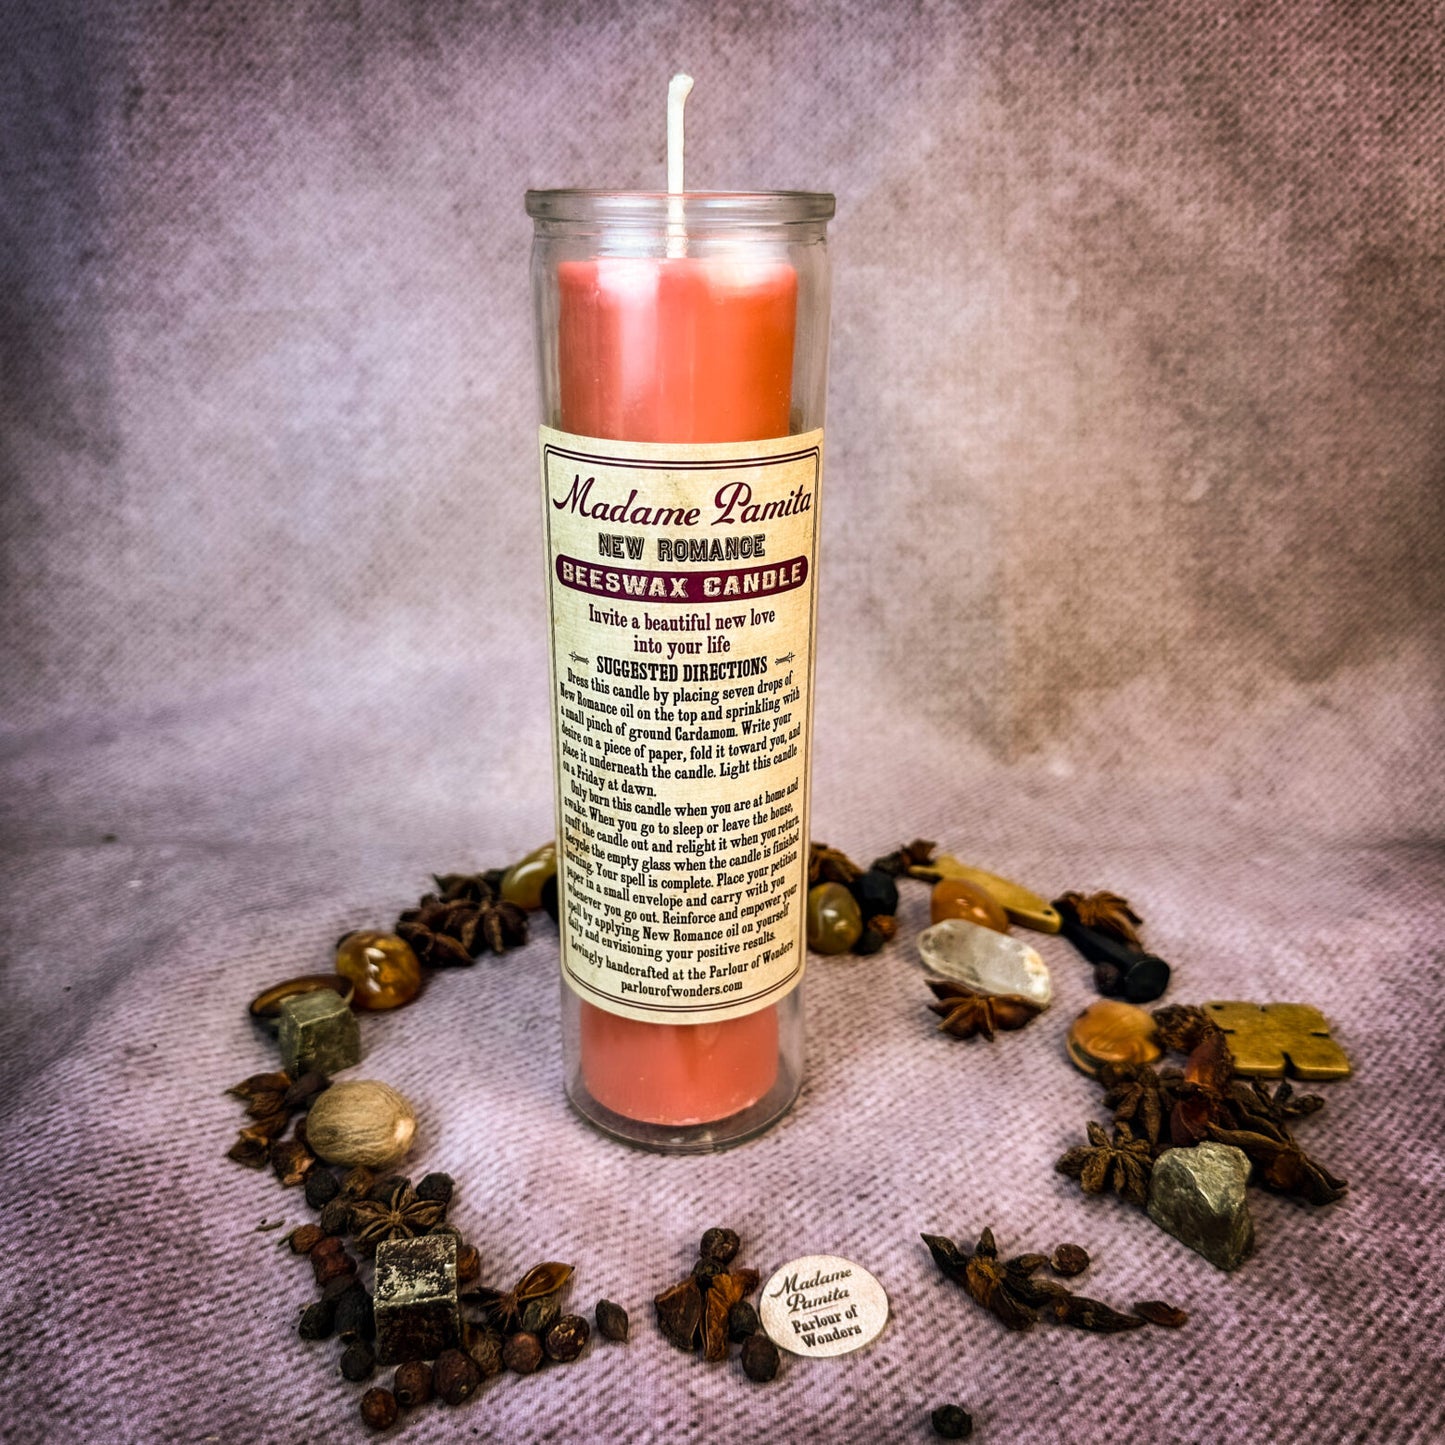 Madame Pamita New Romance Beeswax Vigil Candle